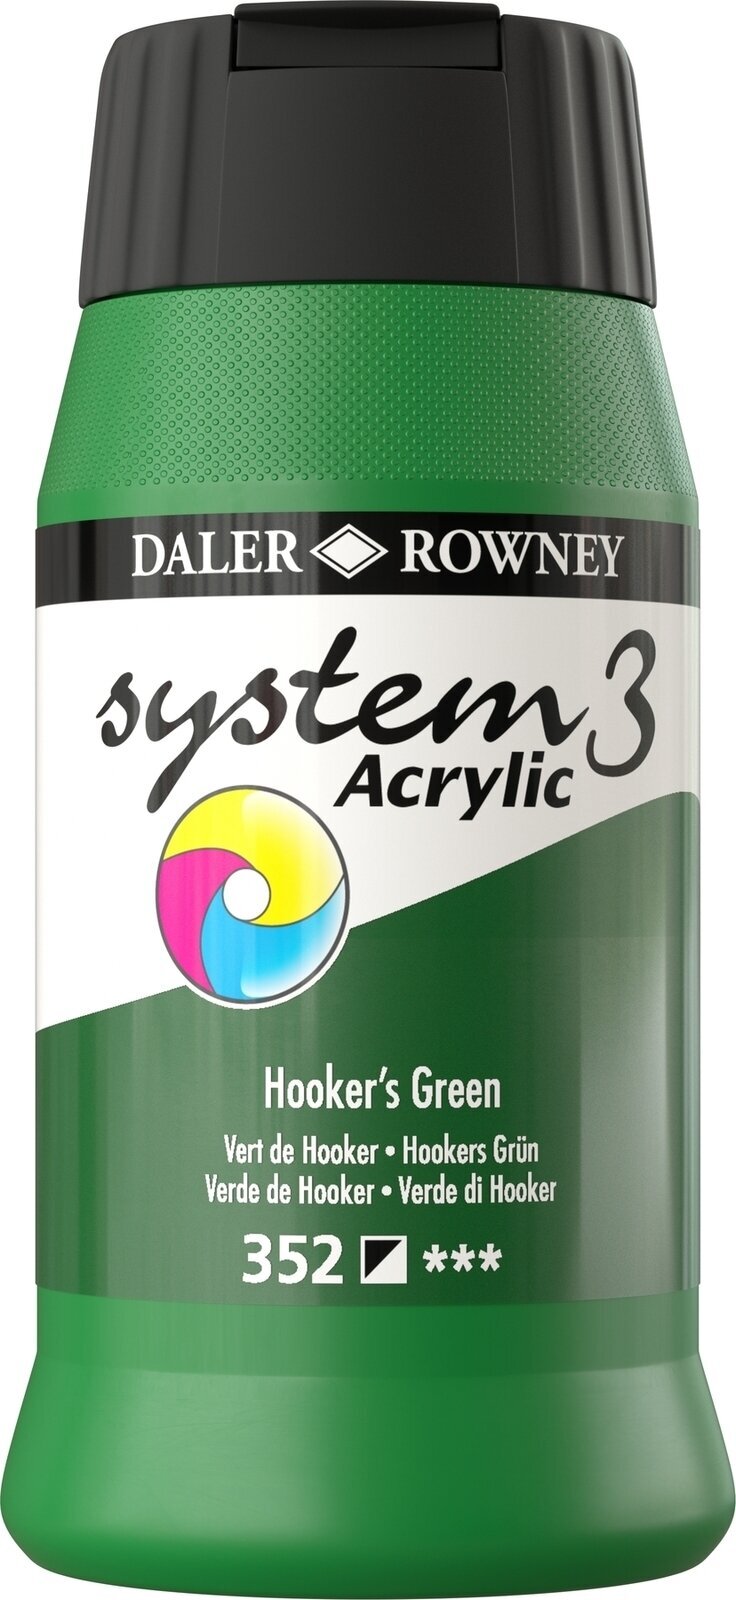 Aκρυλικό Χρώμα Daler Rowney System3 Ακρυλική μπογιά Hooker's Green 500 ml 1 τεμ.